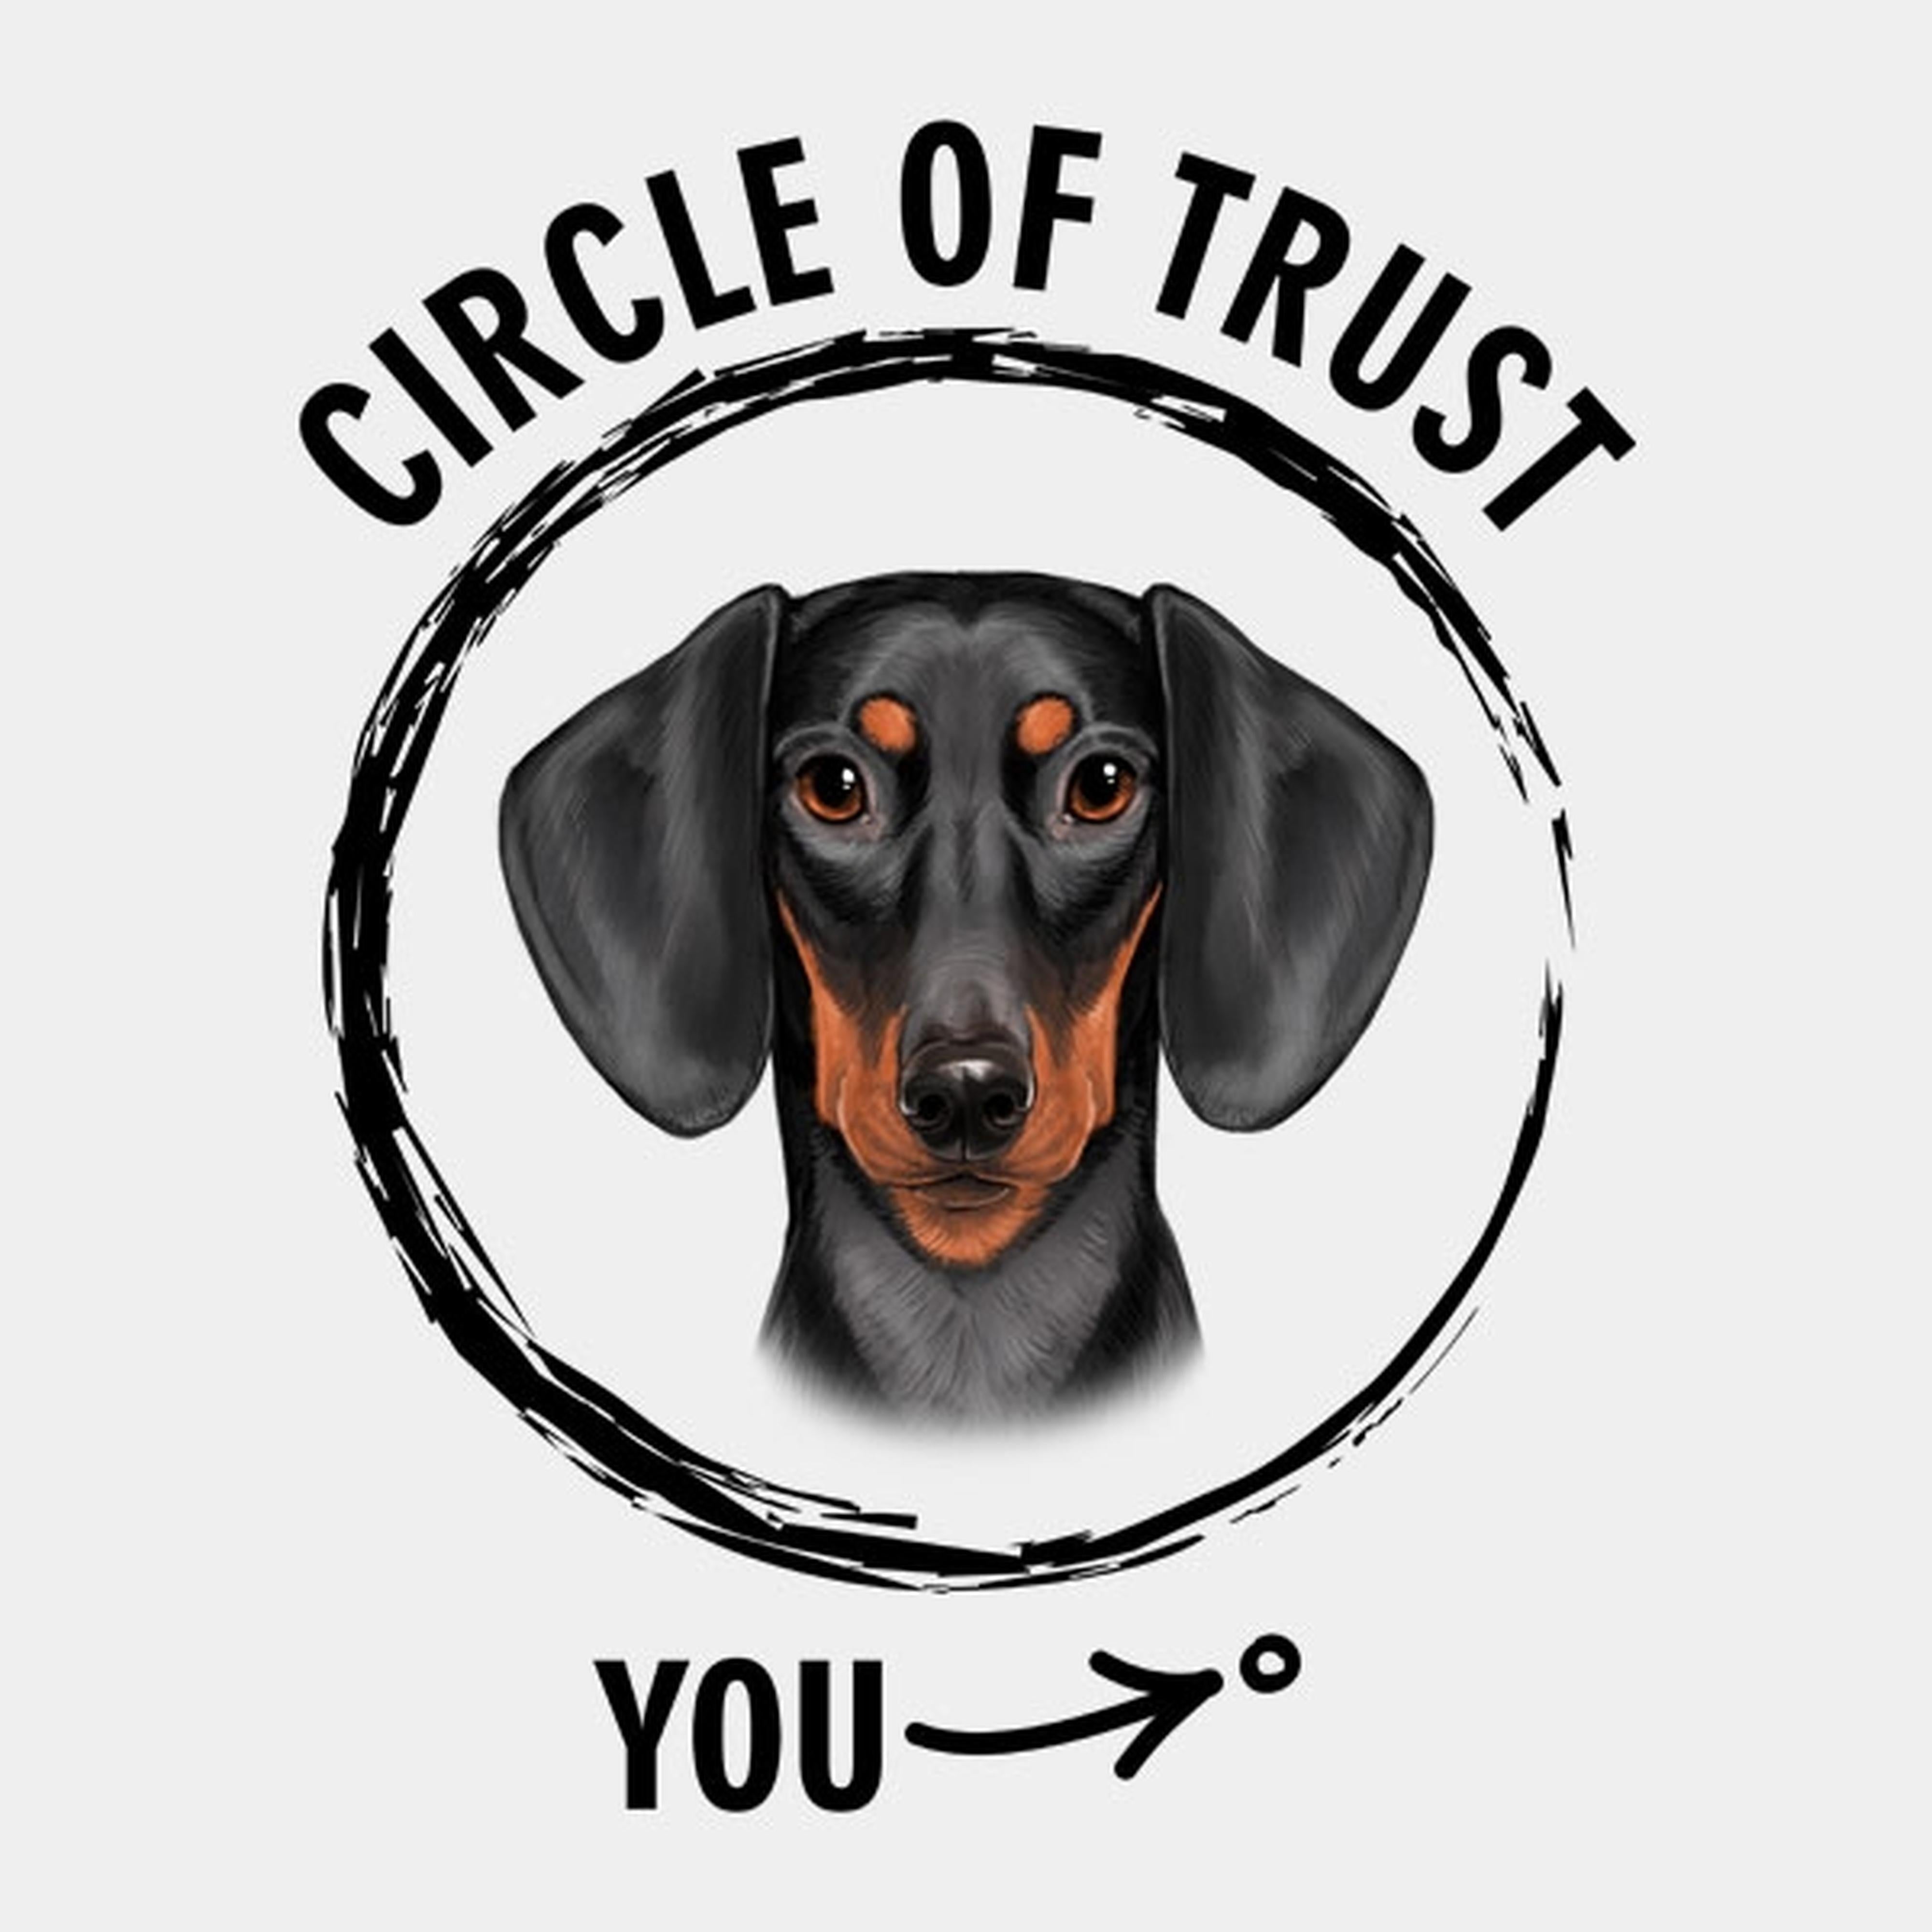 Circle of trust (Duchshund) - T-shirt